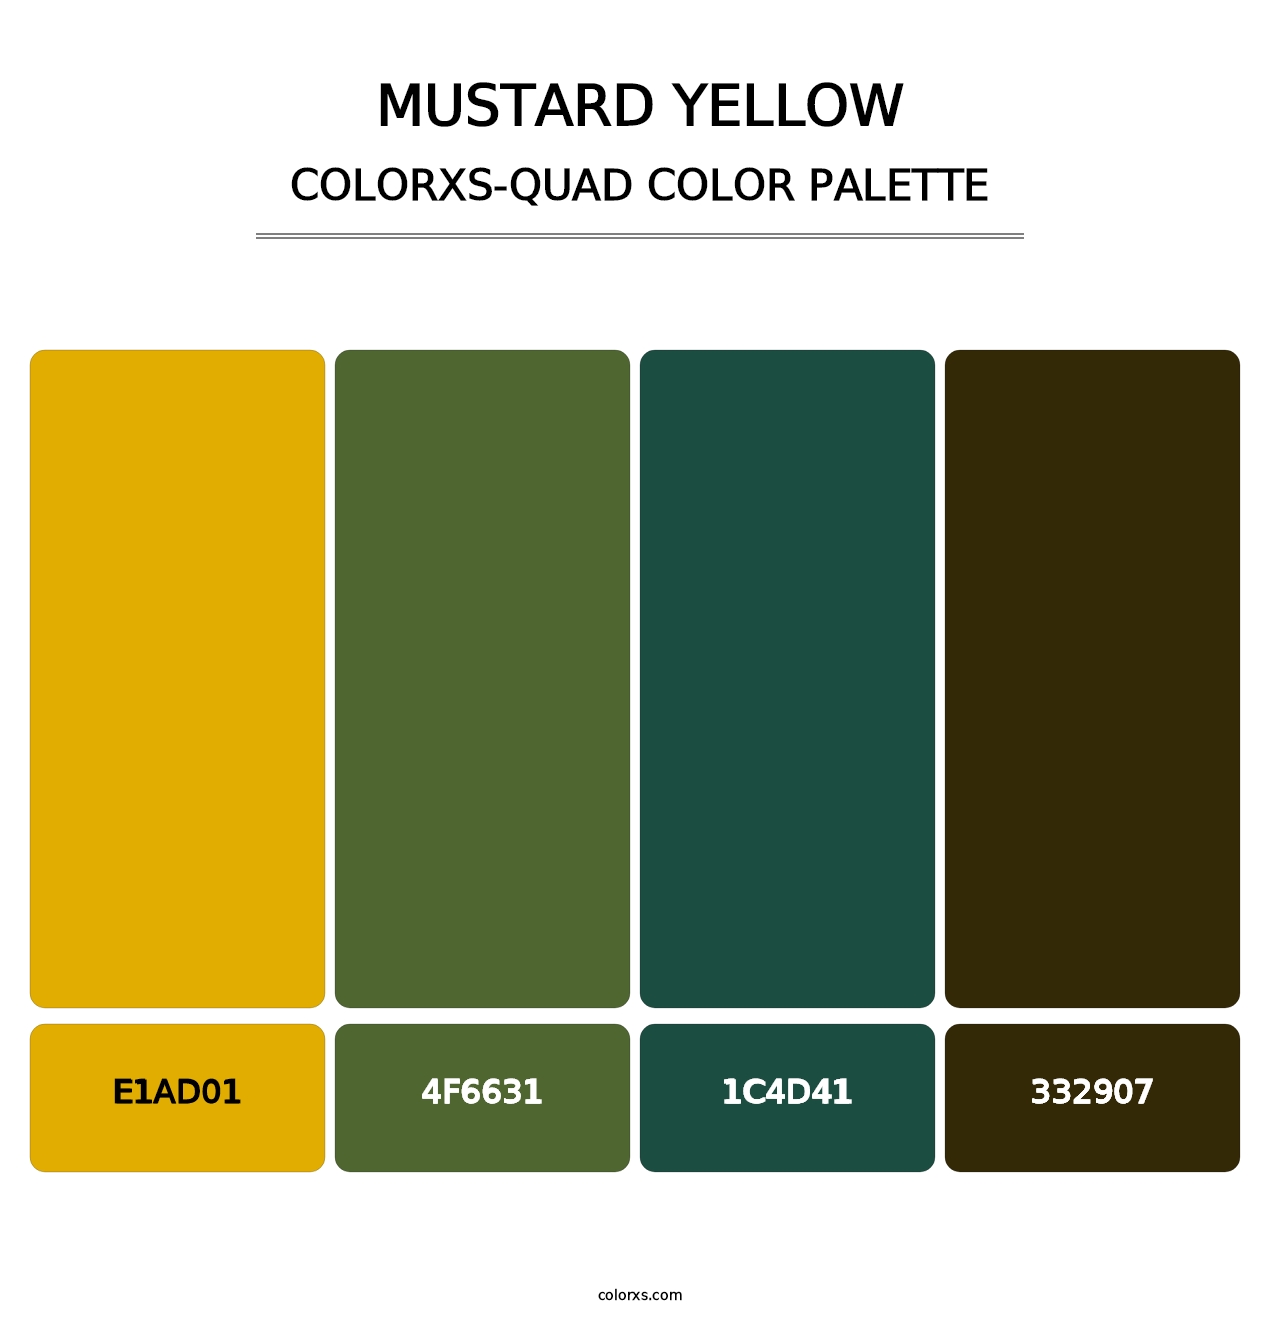 Mustard Yellow - Colorxs Quad Palette